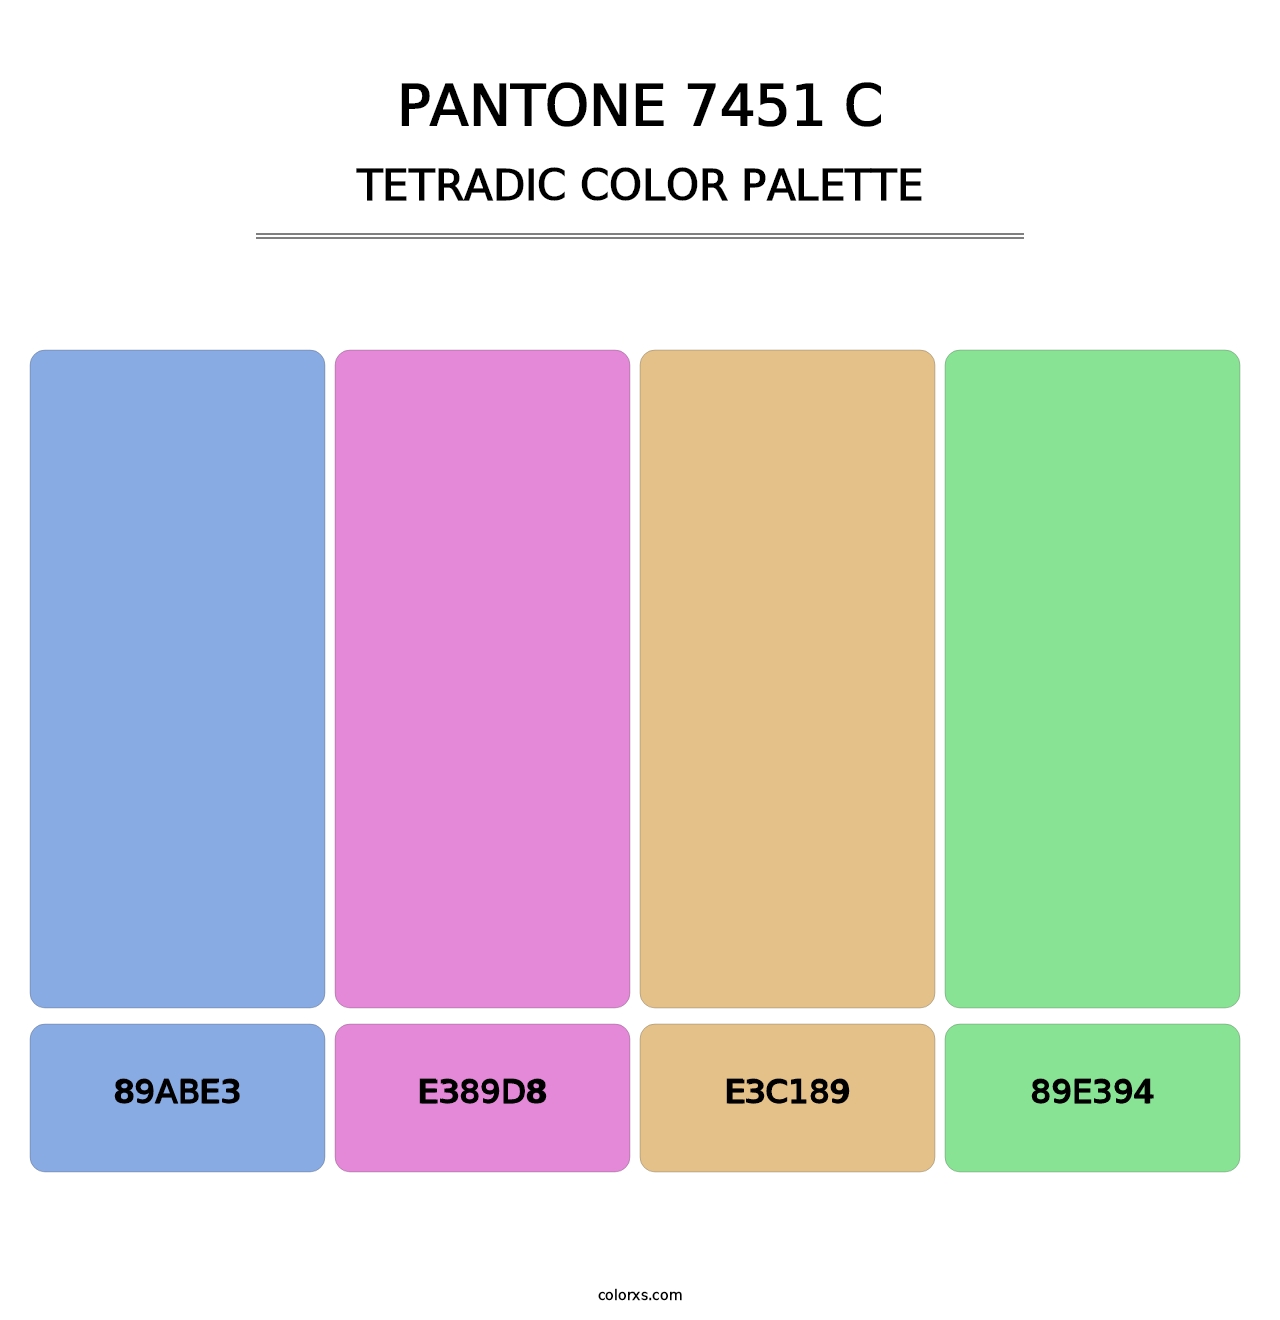 PANTONE 7451 C - Tetradic Color Palette